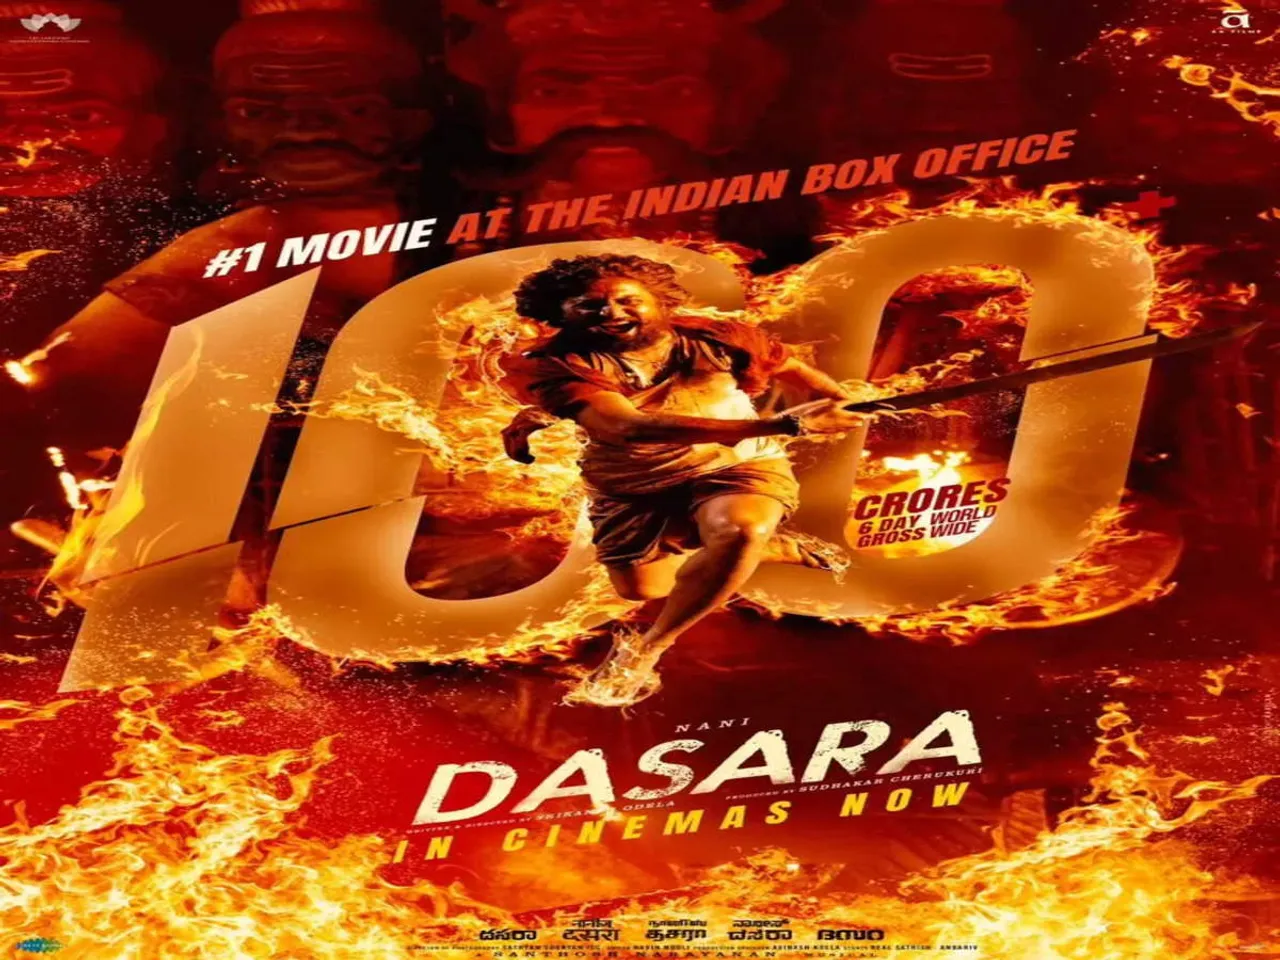 Nani’s ‘Dasara’ crosses Rs 100 crore-mark at box office